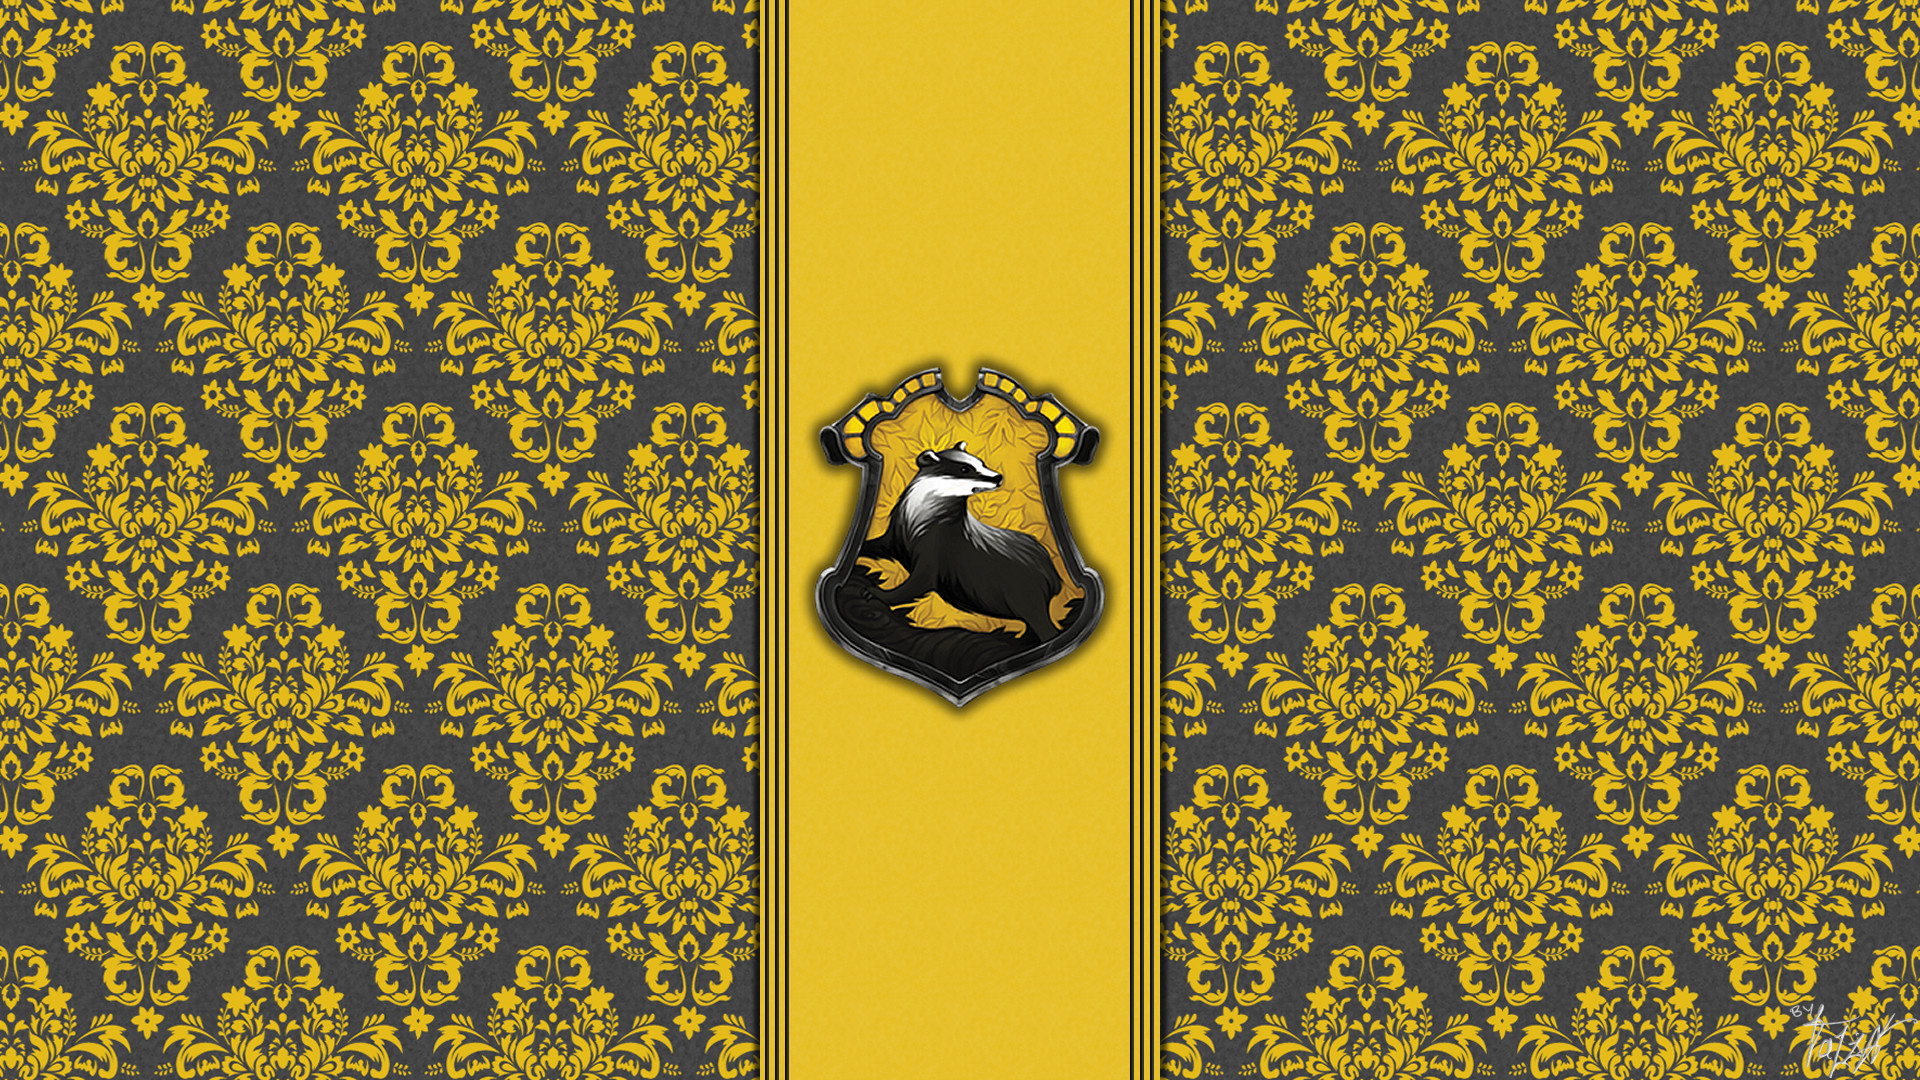 House hufflepuff wallpaper hogwarts paper art theladyavatar Harry Potter Pinterest Colors, Paper and Desktop wallpapers